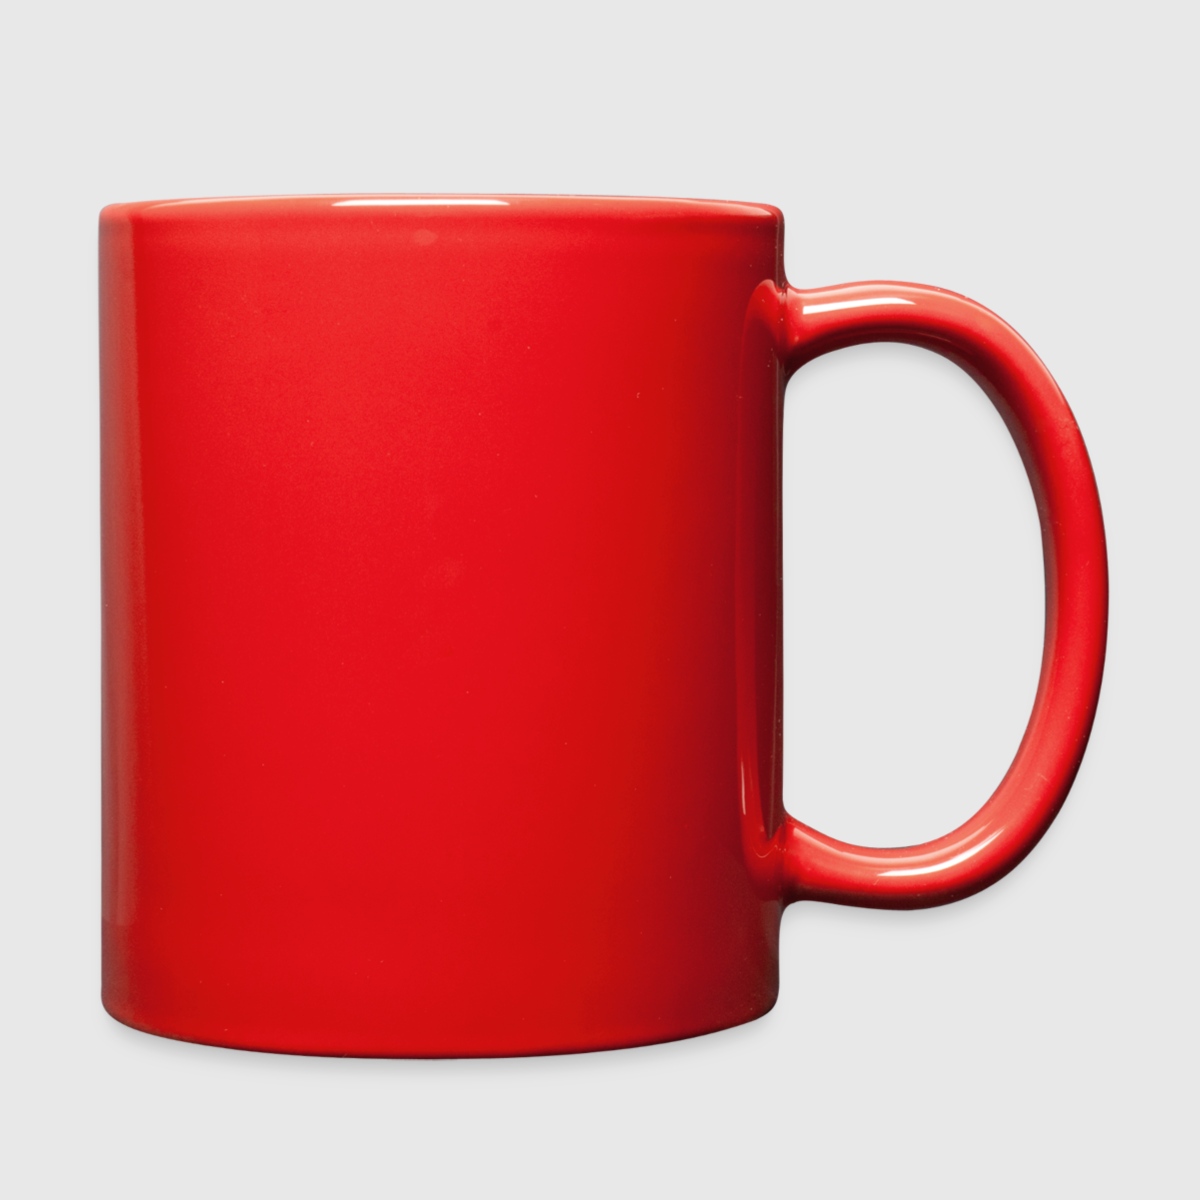 Full Color Mug - Right